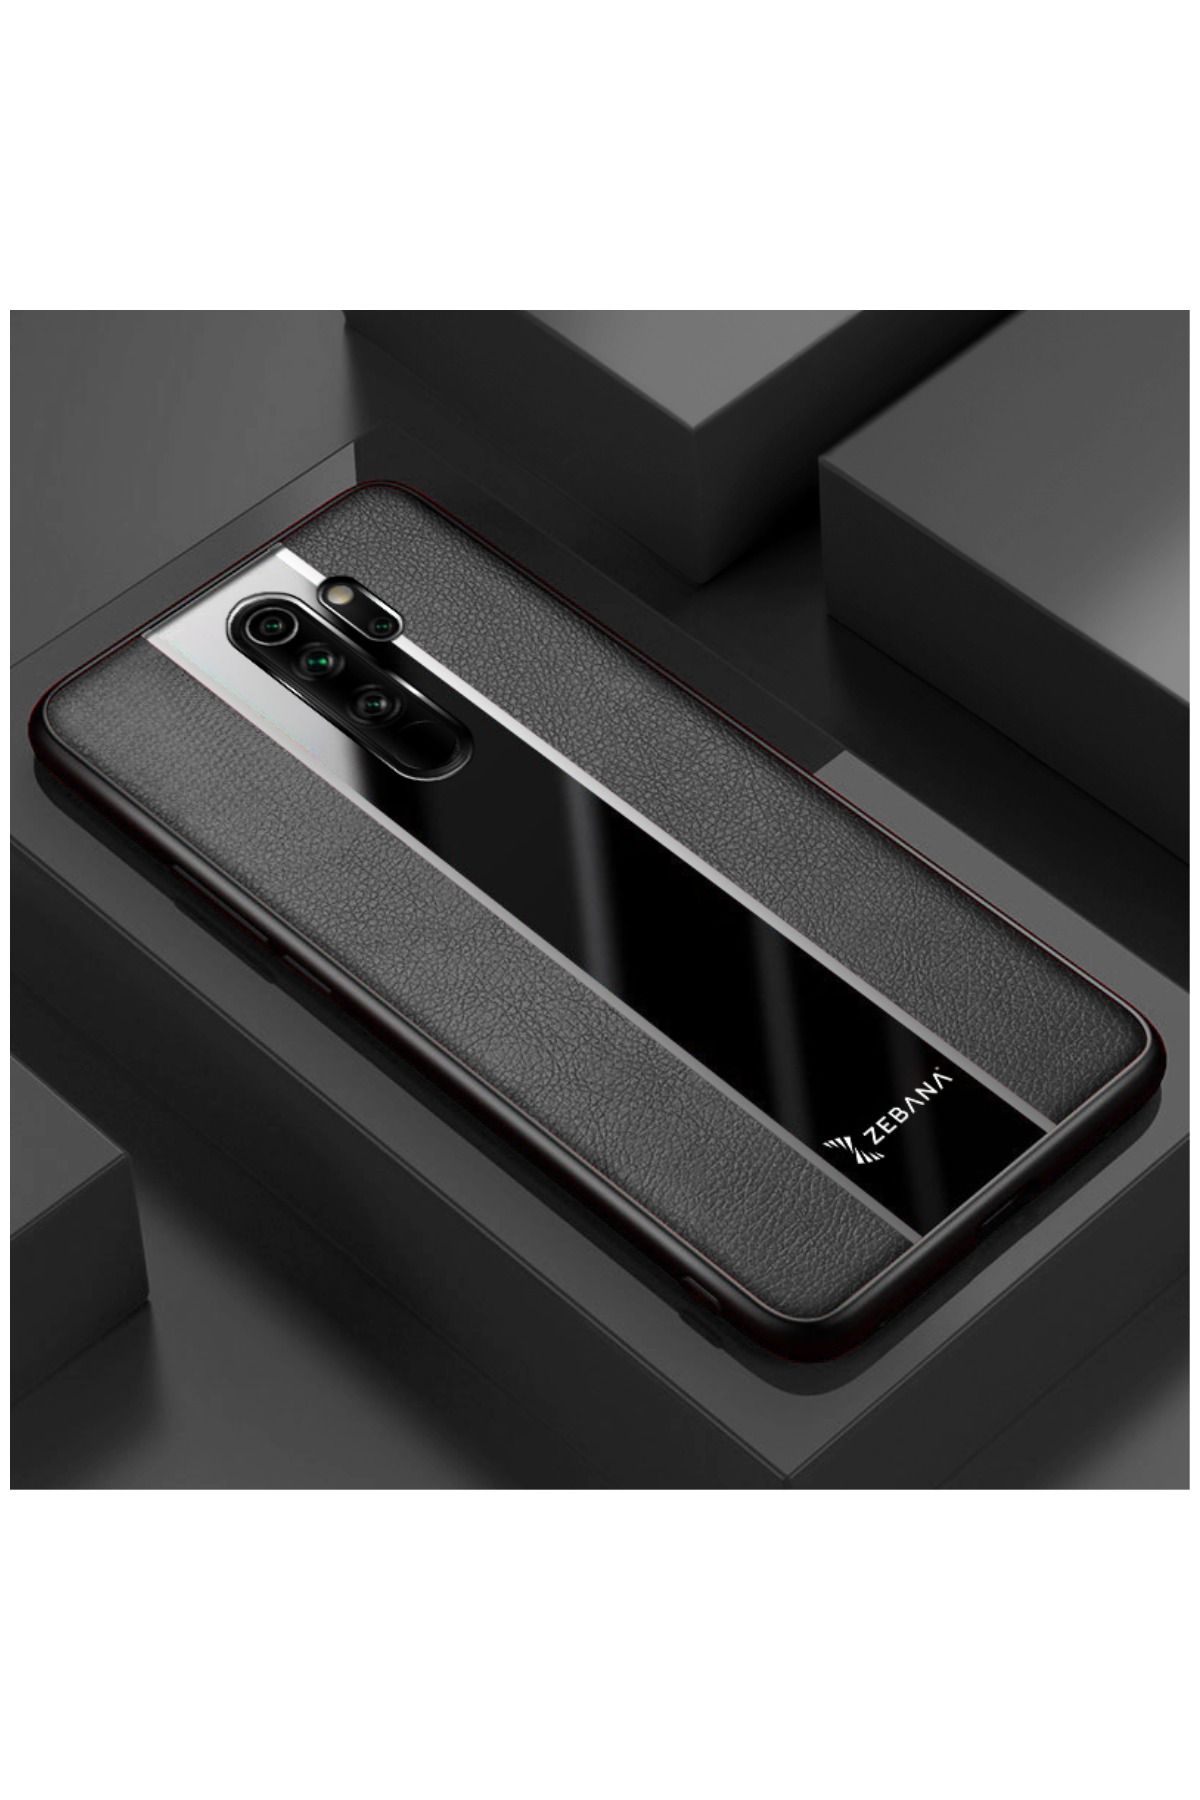 Zebana Xiaomi Redmi Note 8 Pro Uyumlu Kılıf Premium Deri Kılıf Siyah